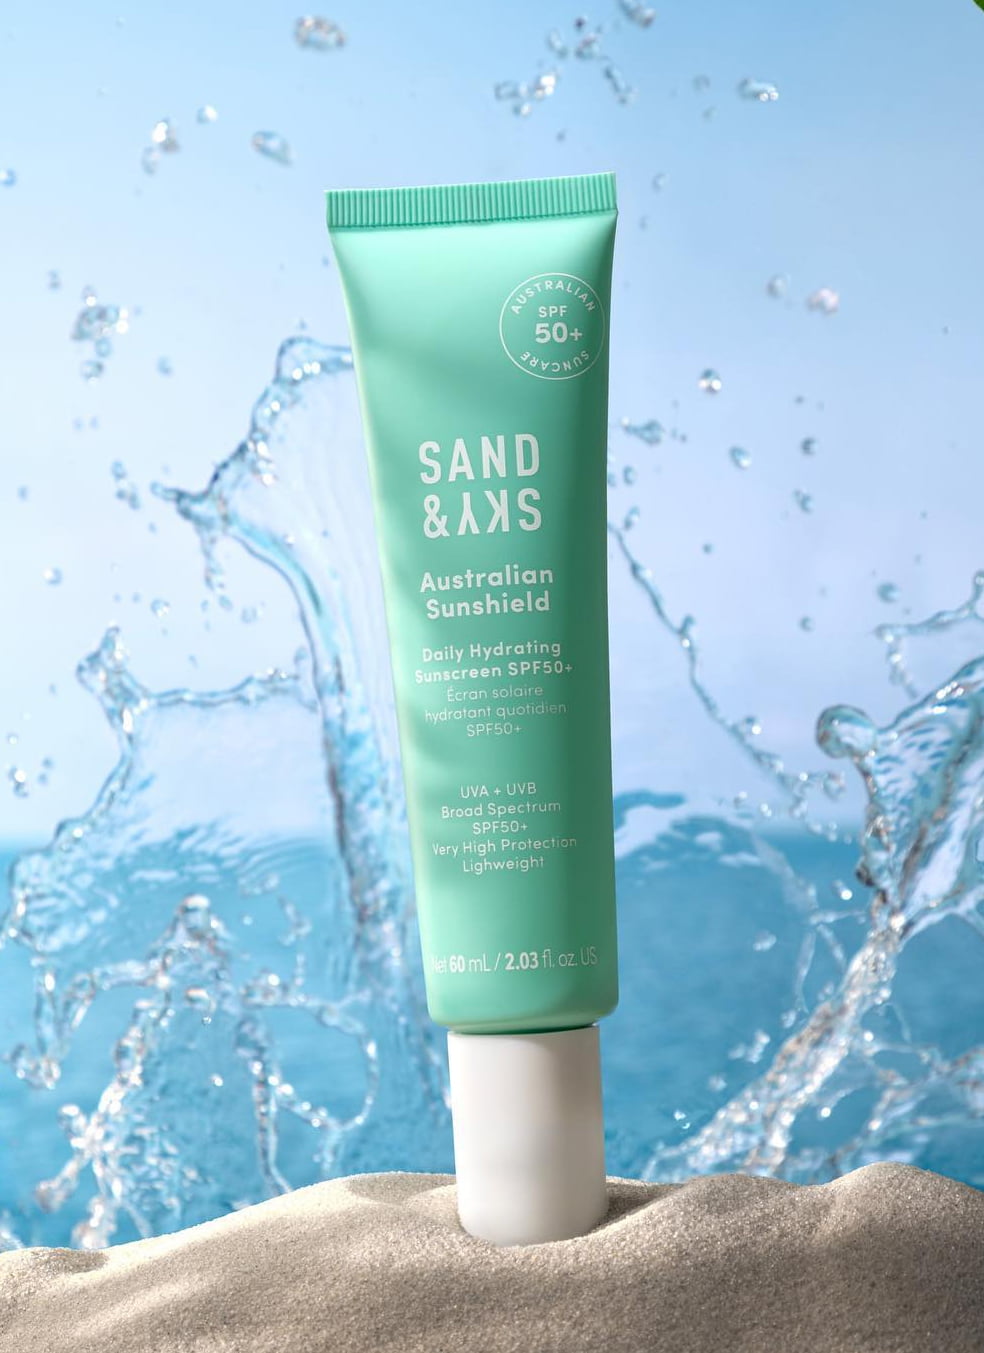 Sand & Sky Daily Hydrating Sunscreen SPF 50+